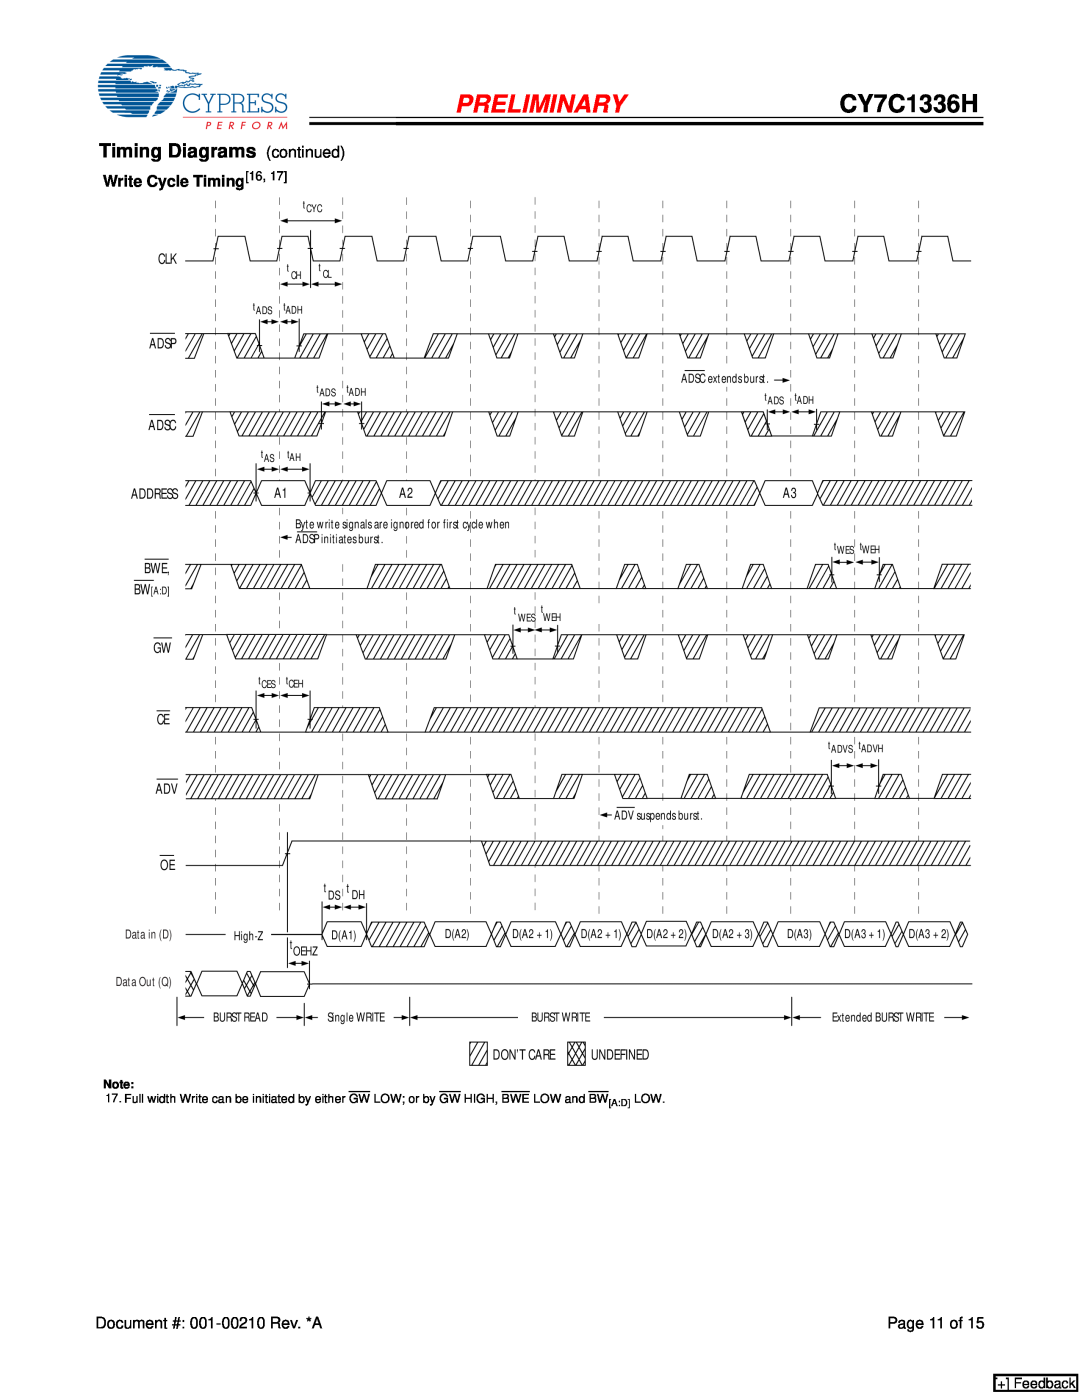 Cypress manual Timing Diagrams continued, PRELIMINARYCY7C1336H, Write Cycle Timing16, + Feedback 